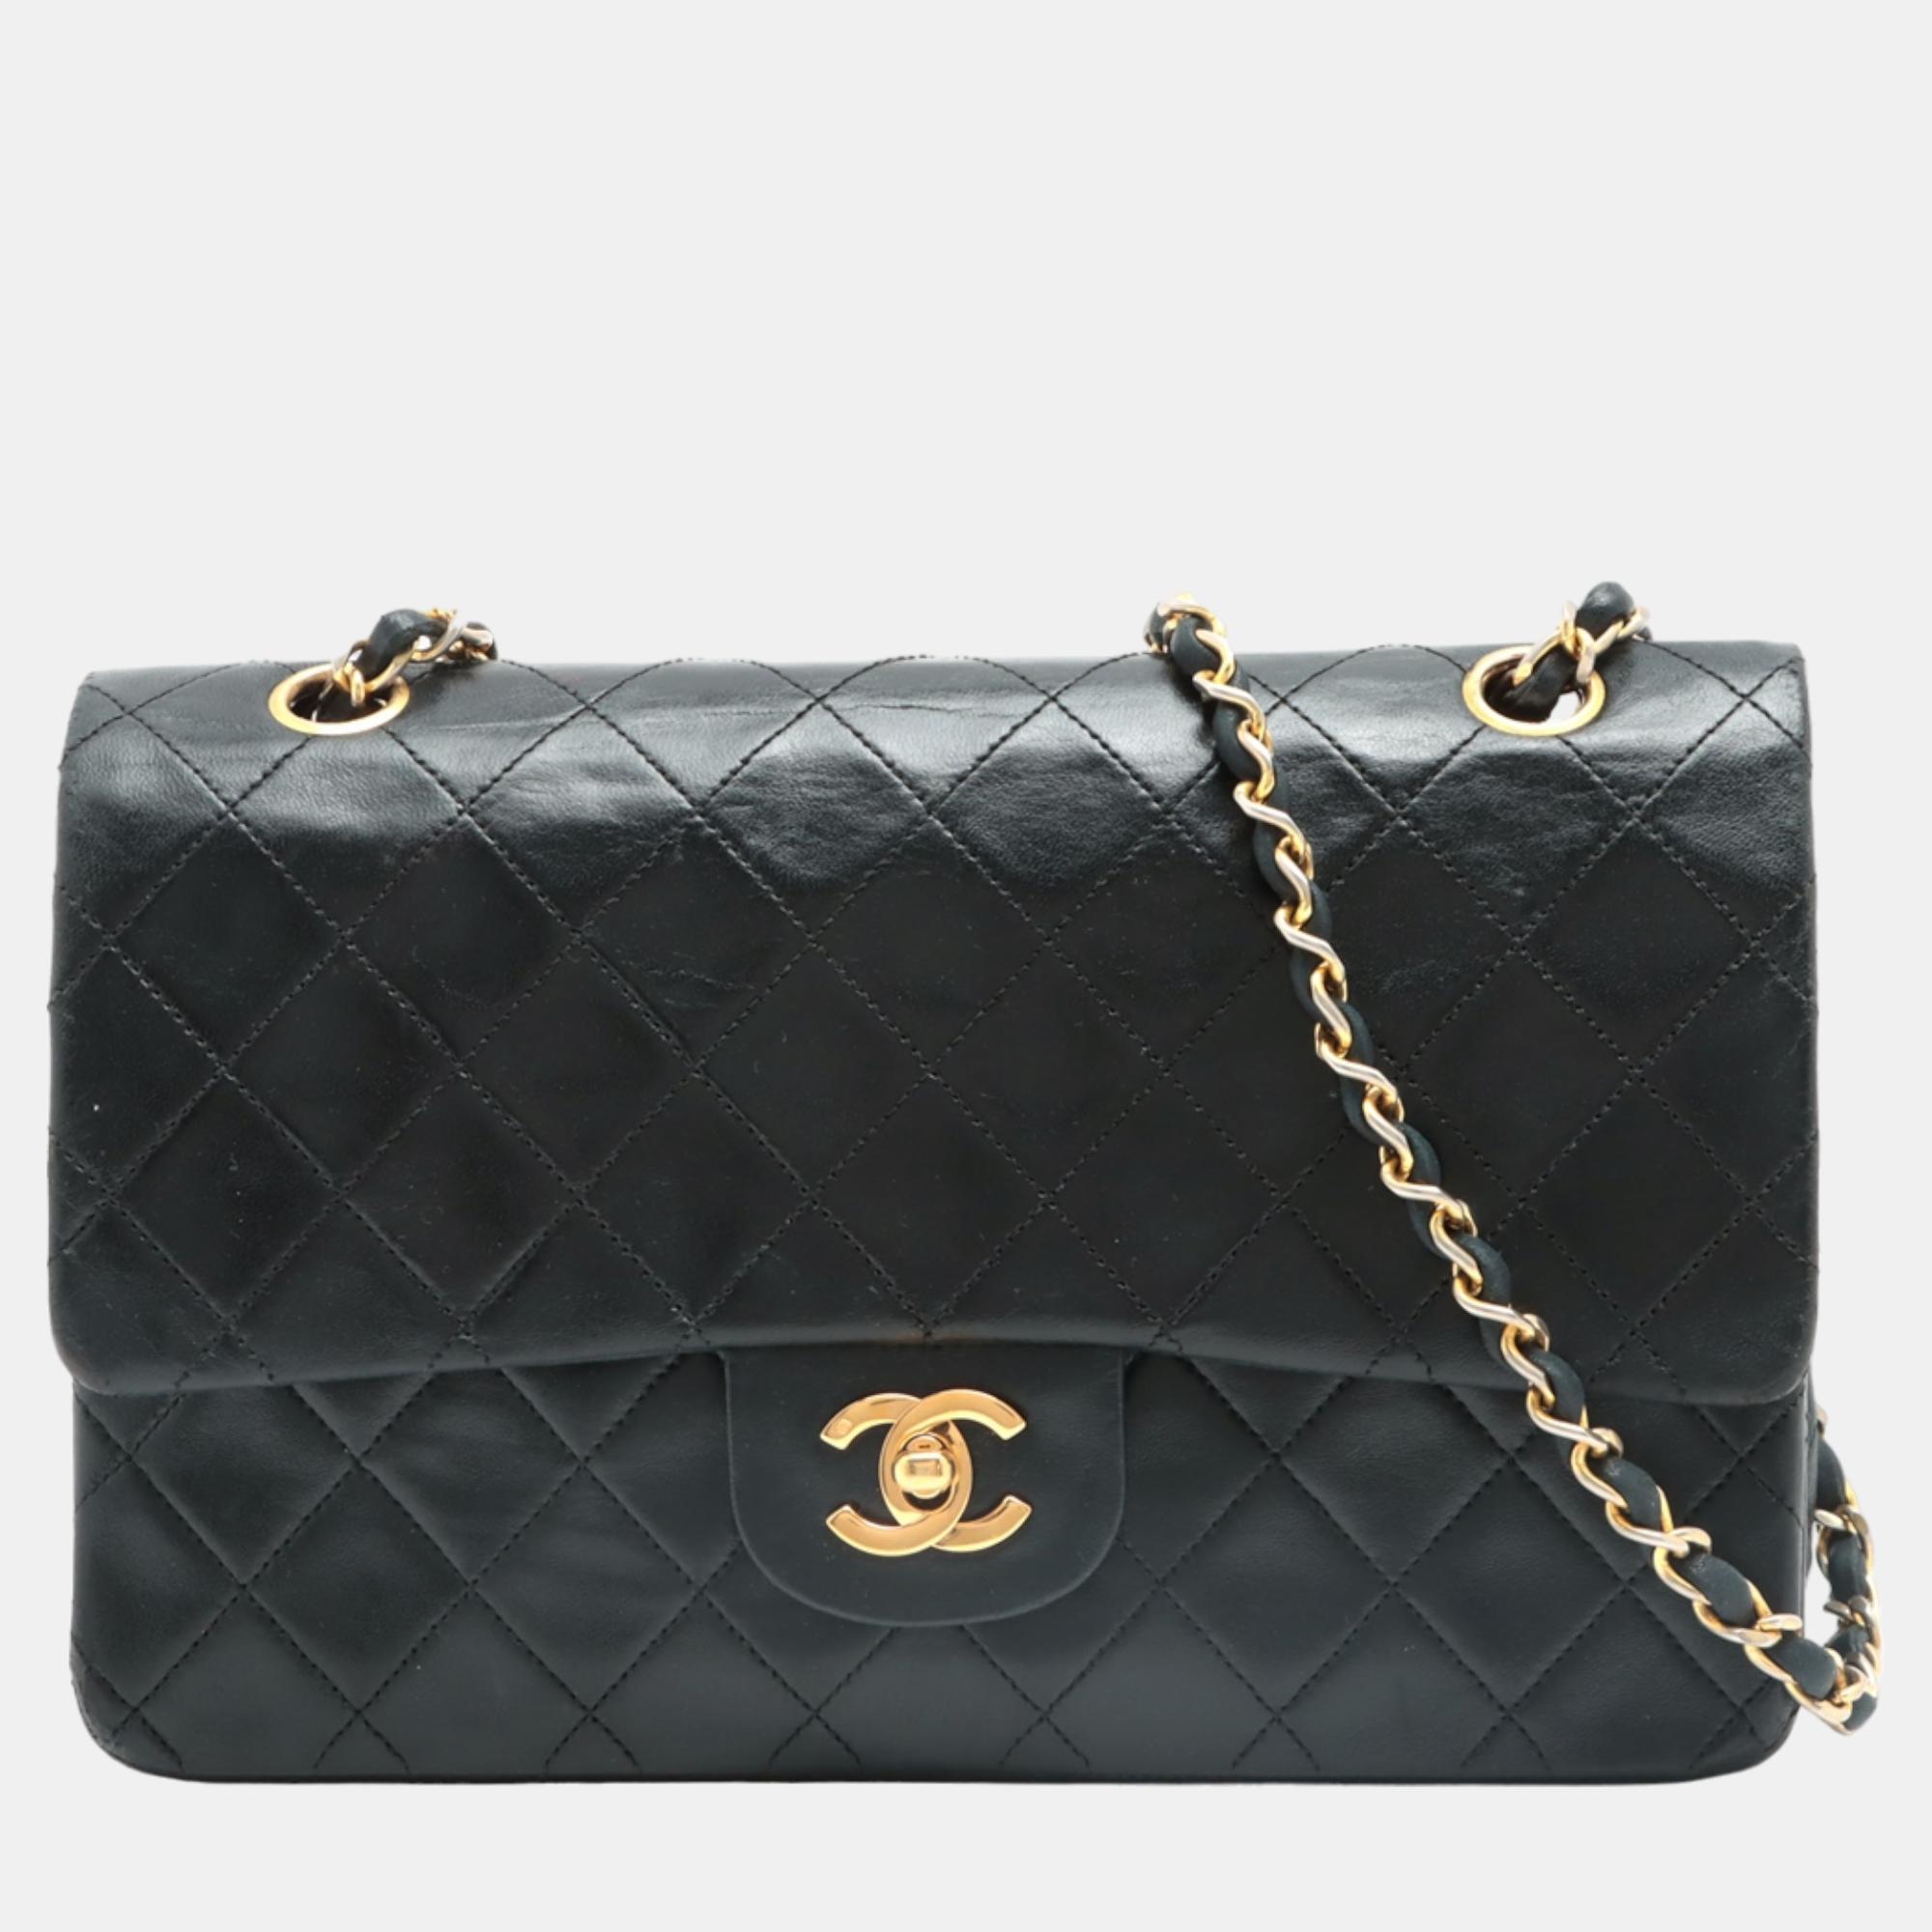 Chanel black lambskin leather medium classic double flap shoulder bags